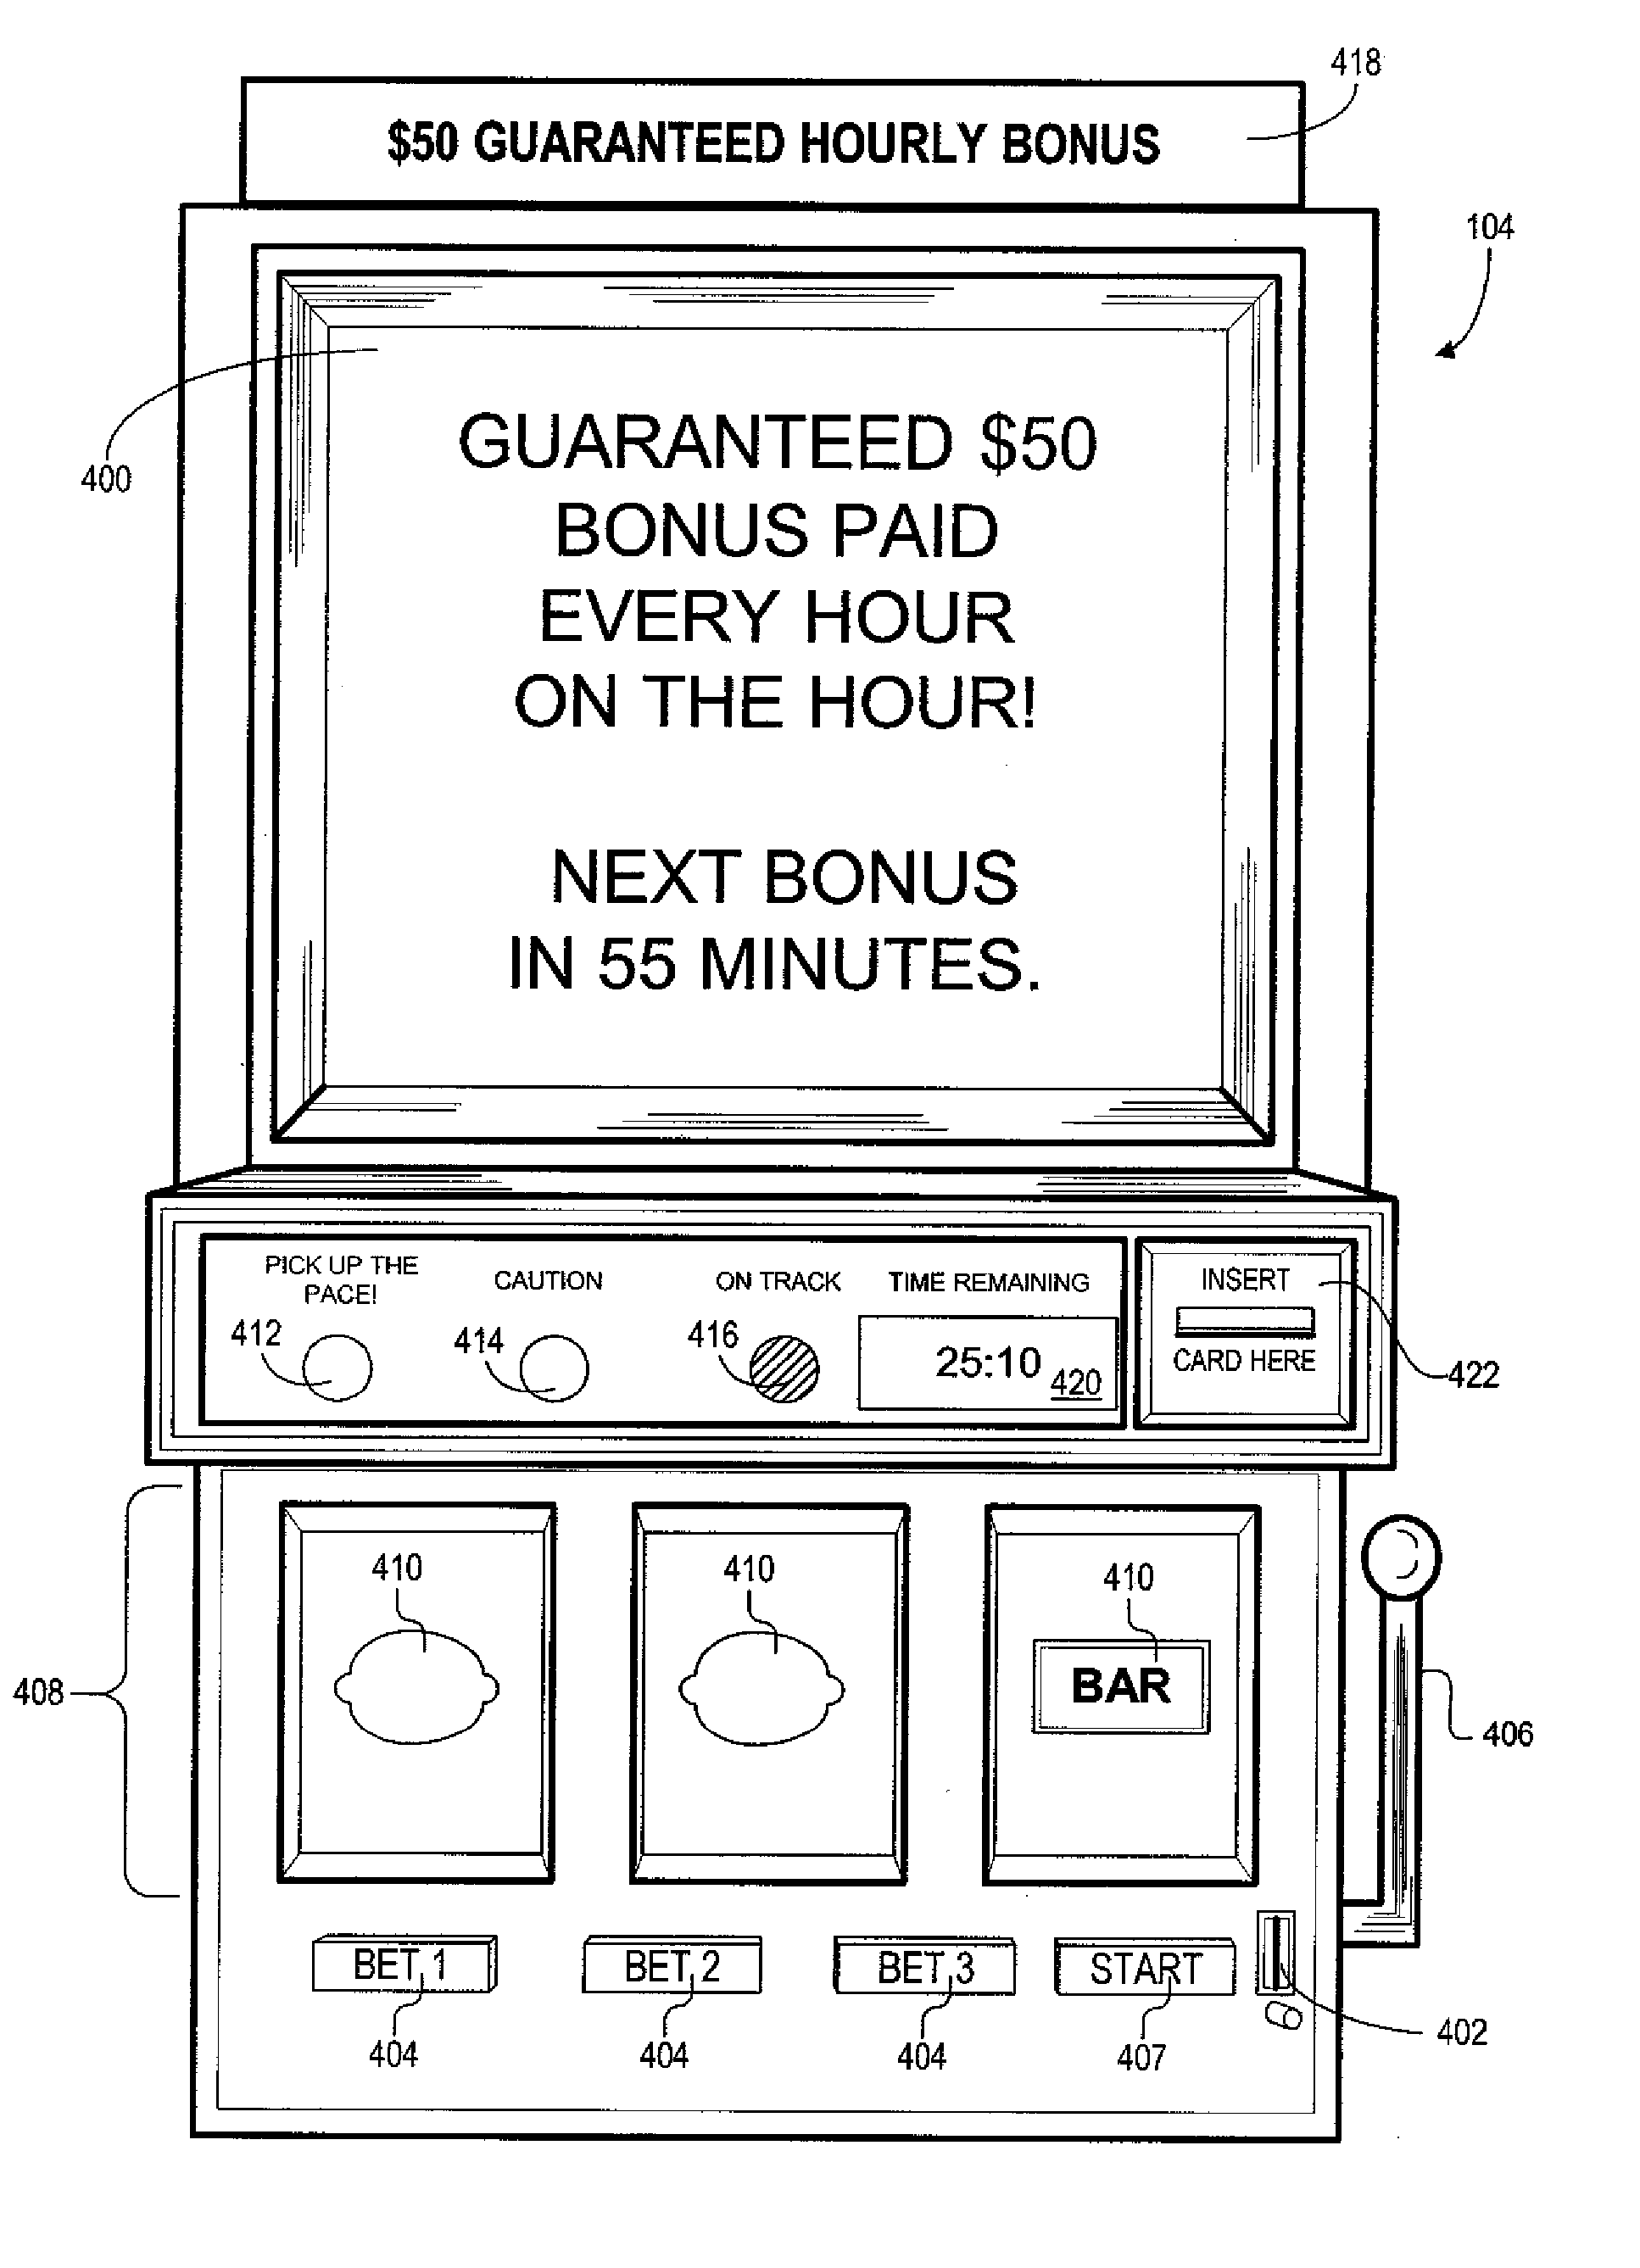 Method and apparatus for providing regular entrance into a bonus game